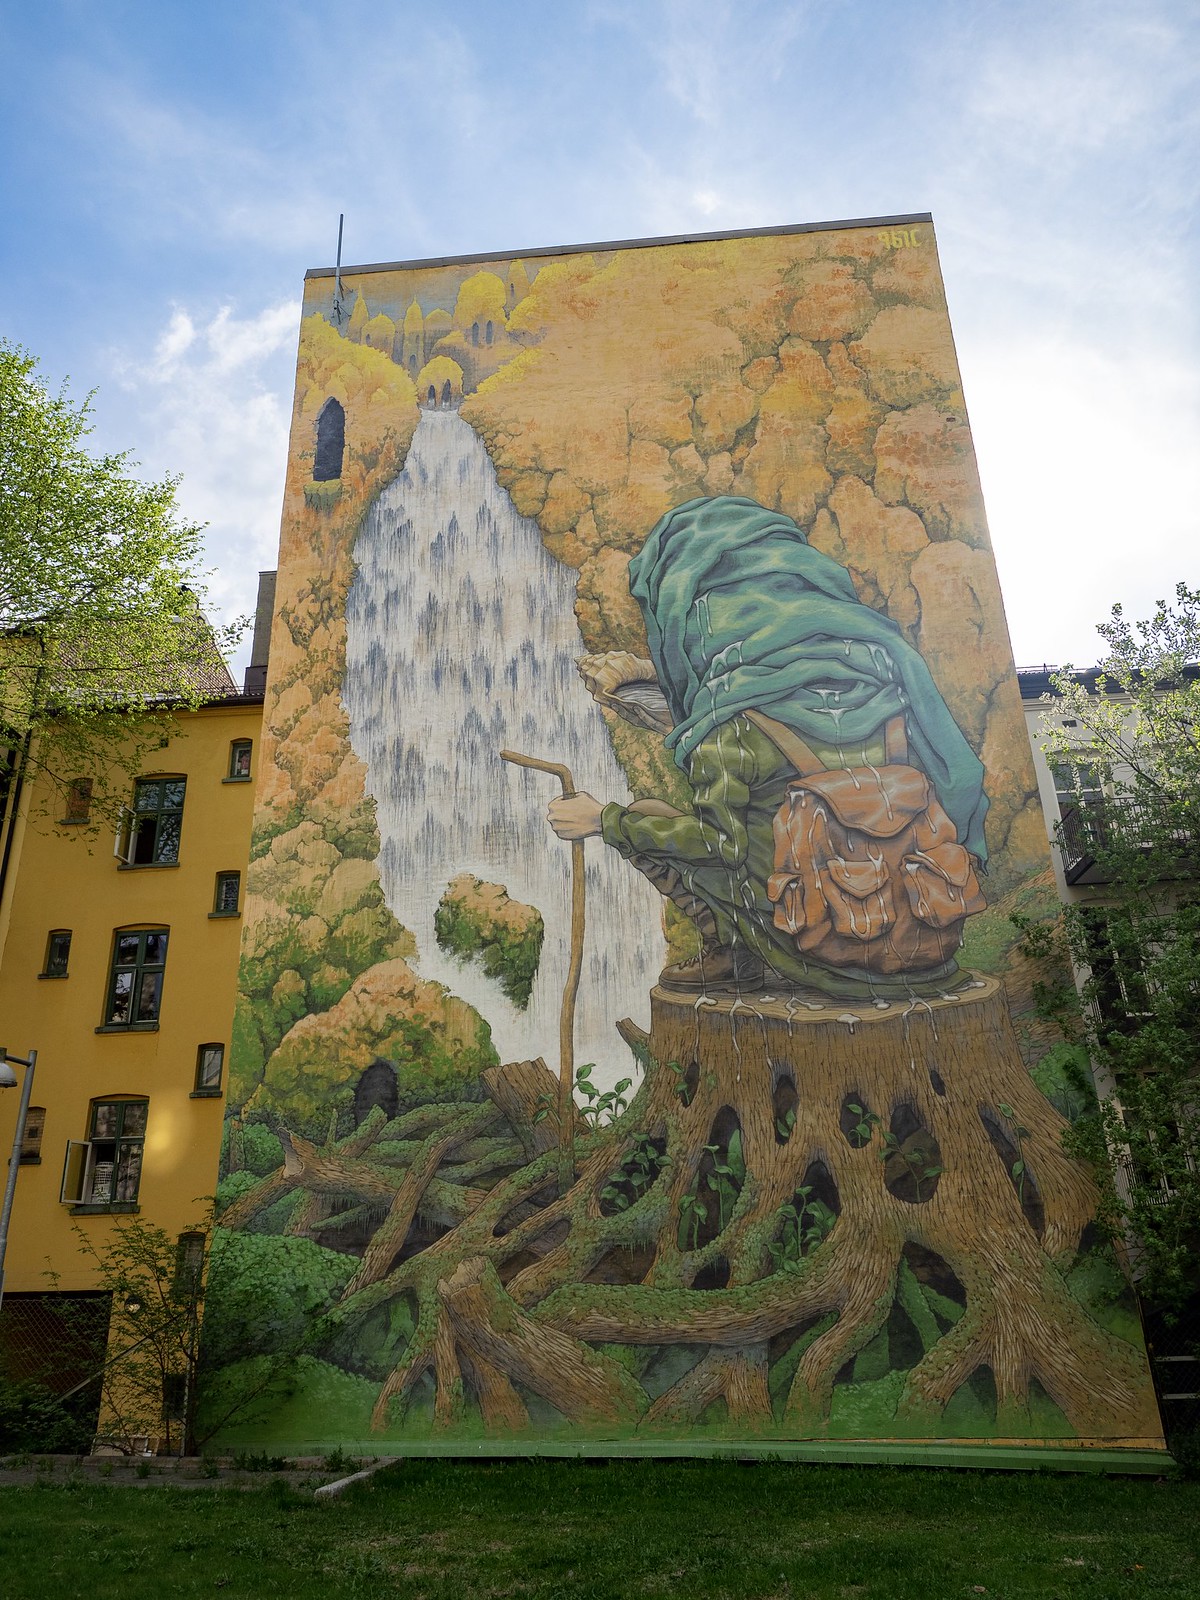 Oslo street art